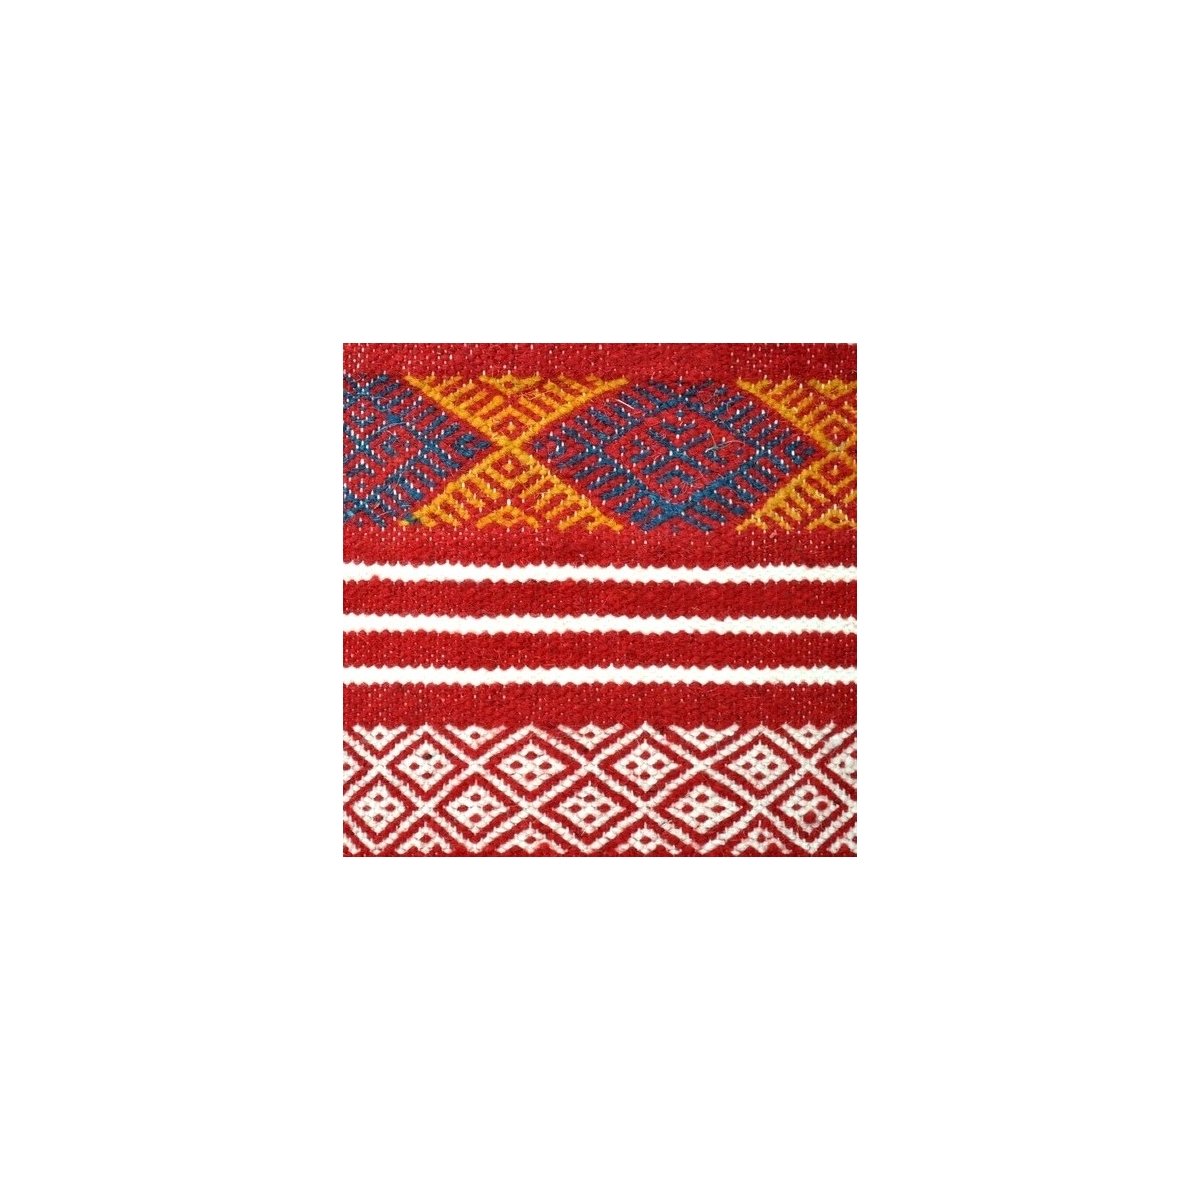 Berber tapijt Tapijt Kilim Zaafrane 105x145 Veelkleurig (Handgeweven, Wol, Tunesië) Tunesisch kilimdeken, Marokkaanse stijl. Rec